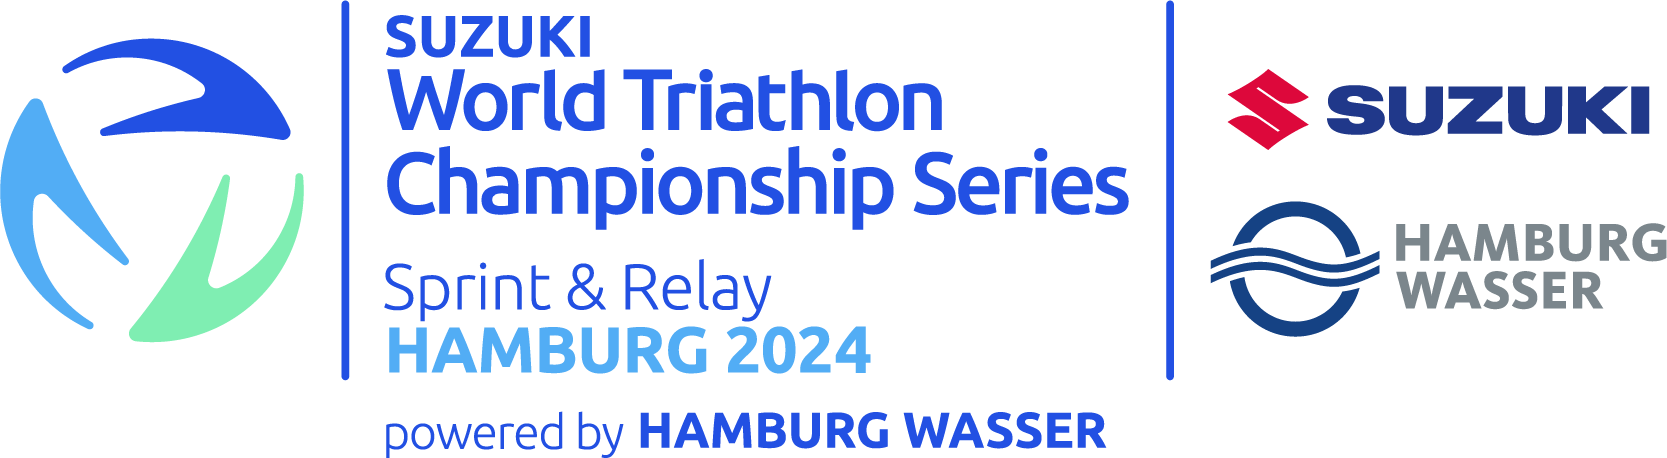 2024 World Triathlon Championship Series Hamburg logo